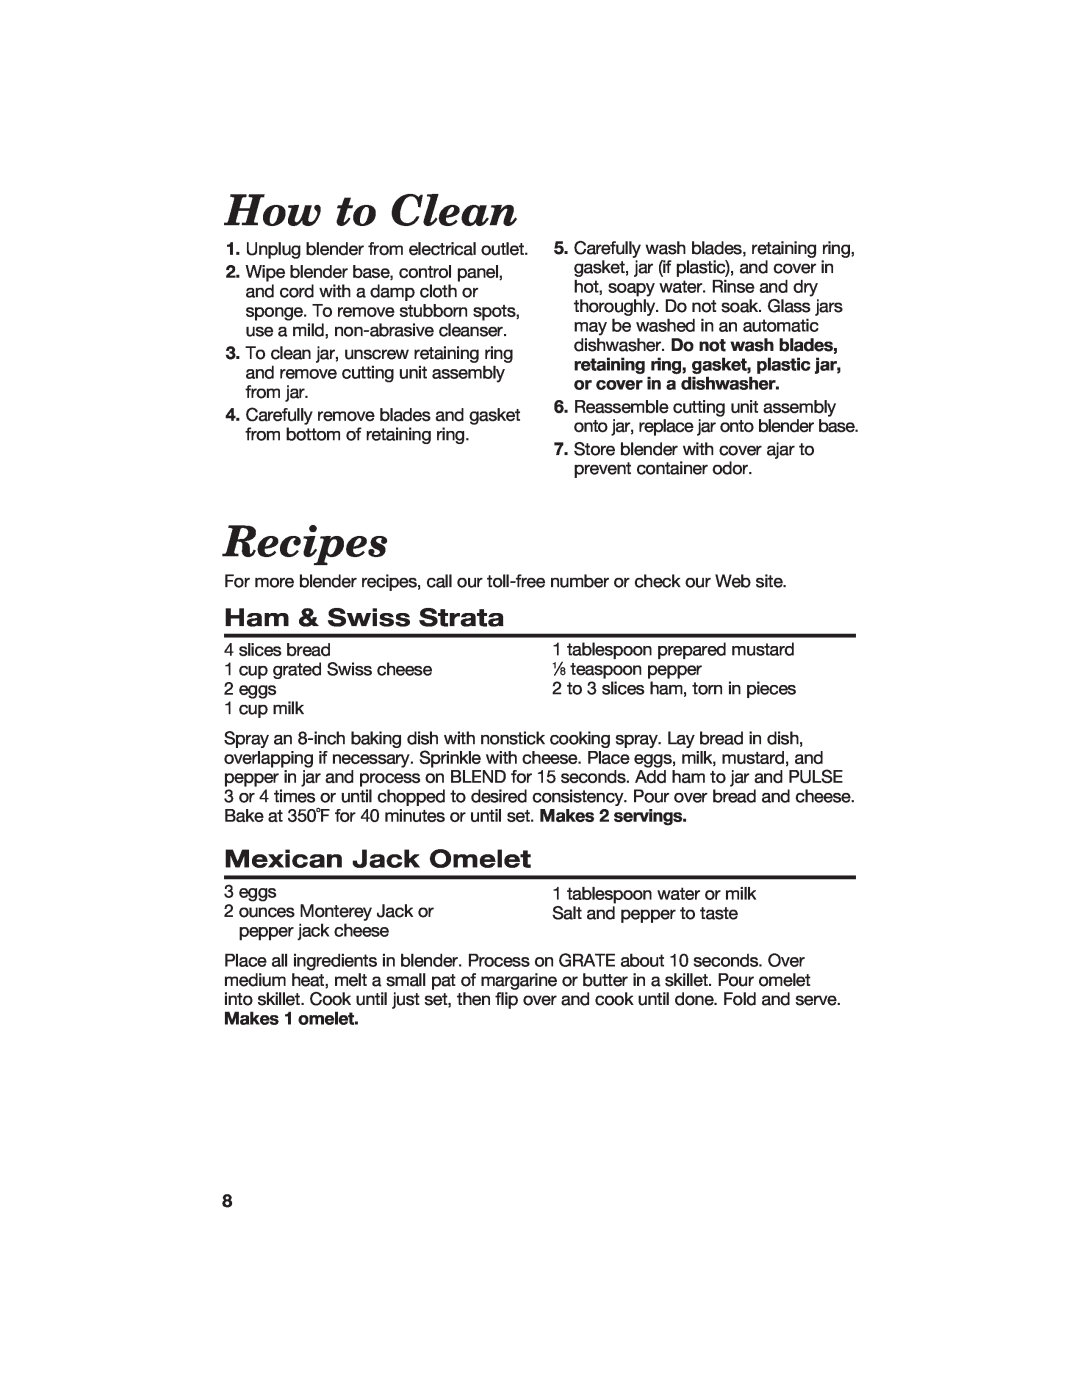 Hamilton Beach 840071000 manual How to Clean, Recipes, Ham & Swiss Strata, Mexican Jack Omelet 